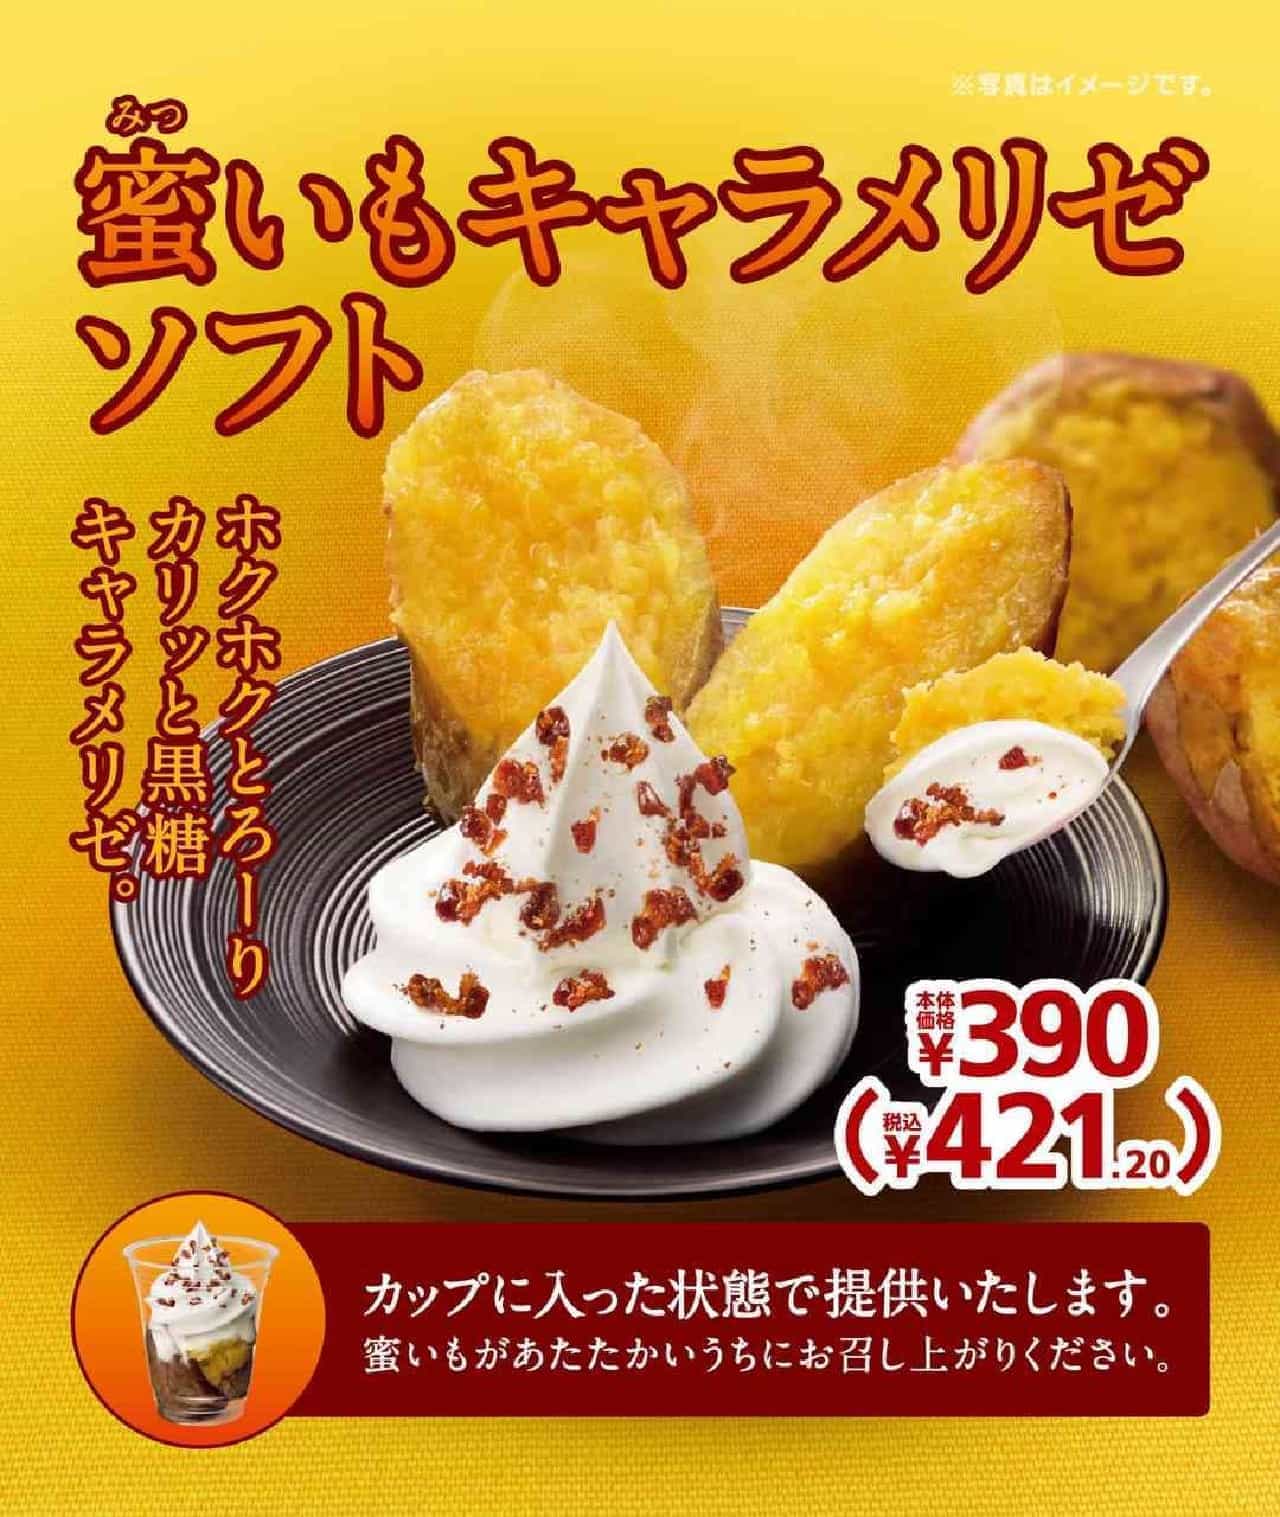 Ministop "Honey Potato Caramelized Soft".